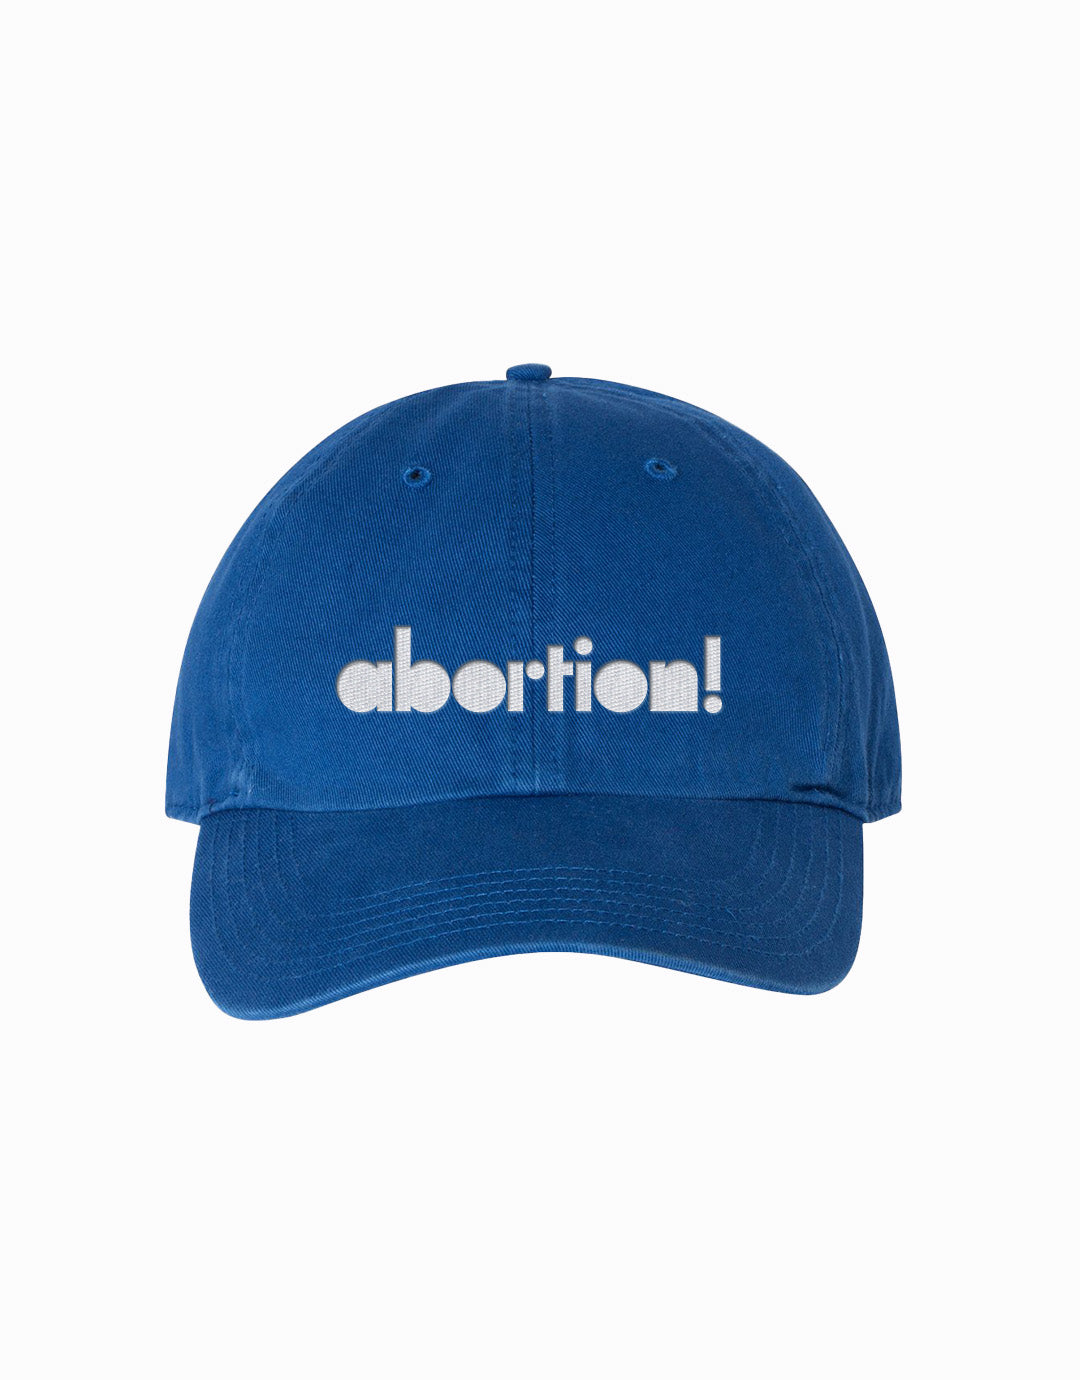 Abortion! Hat